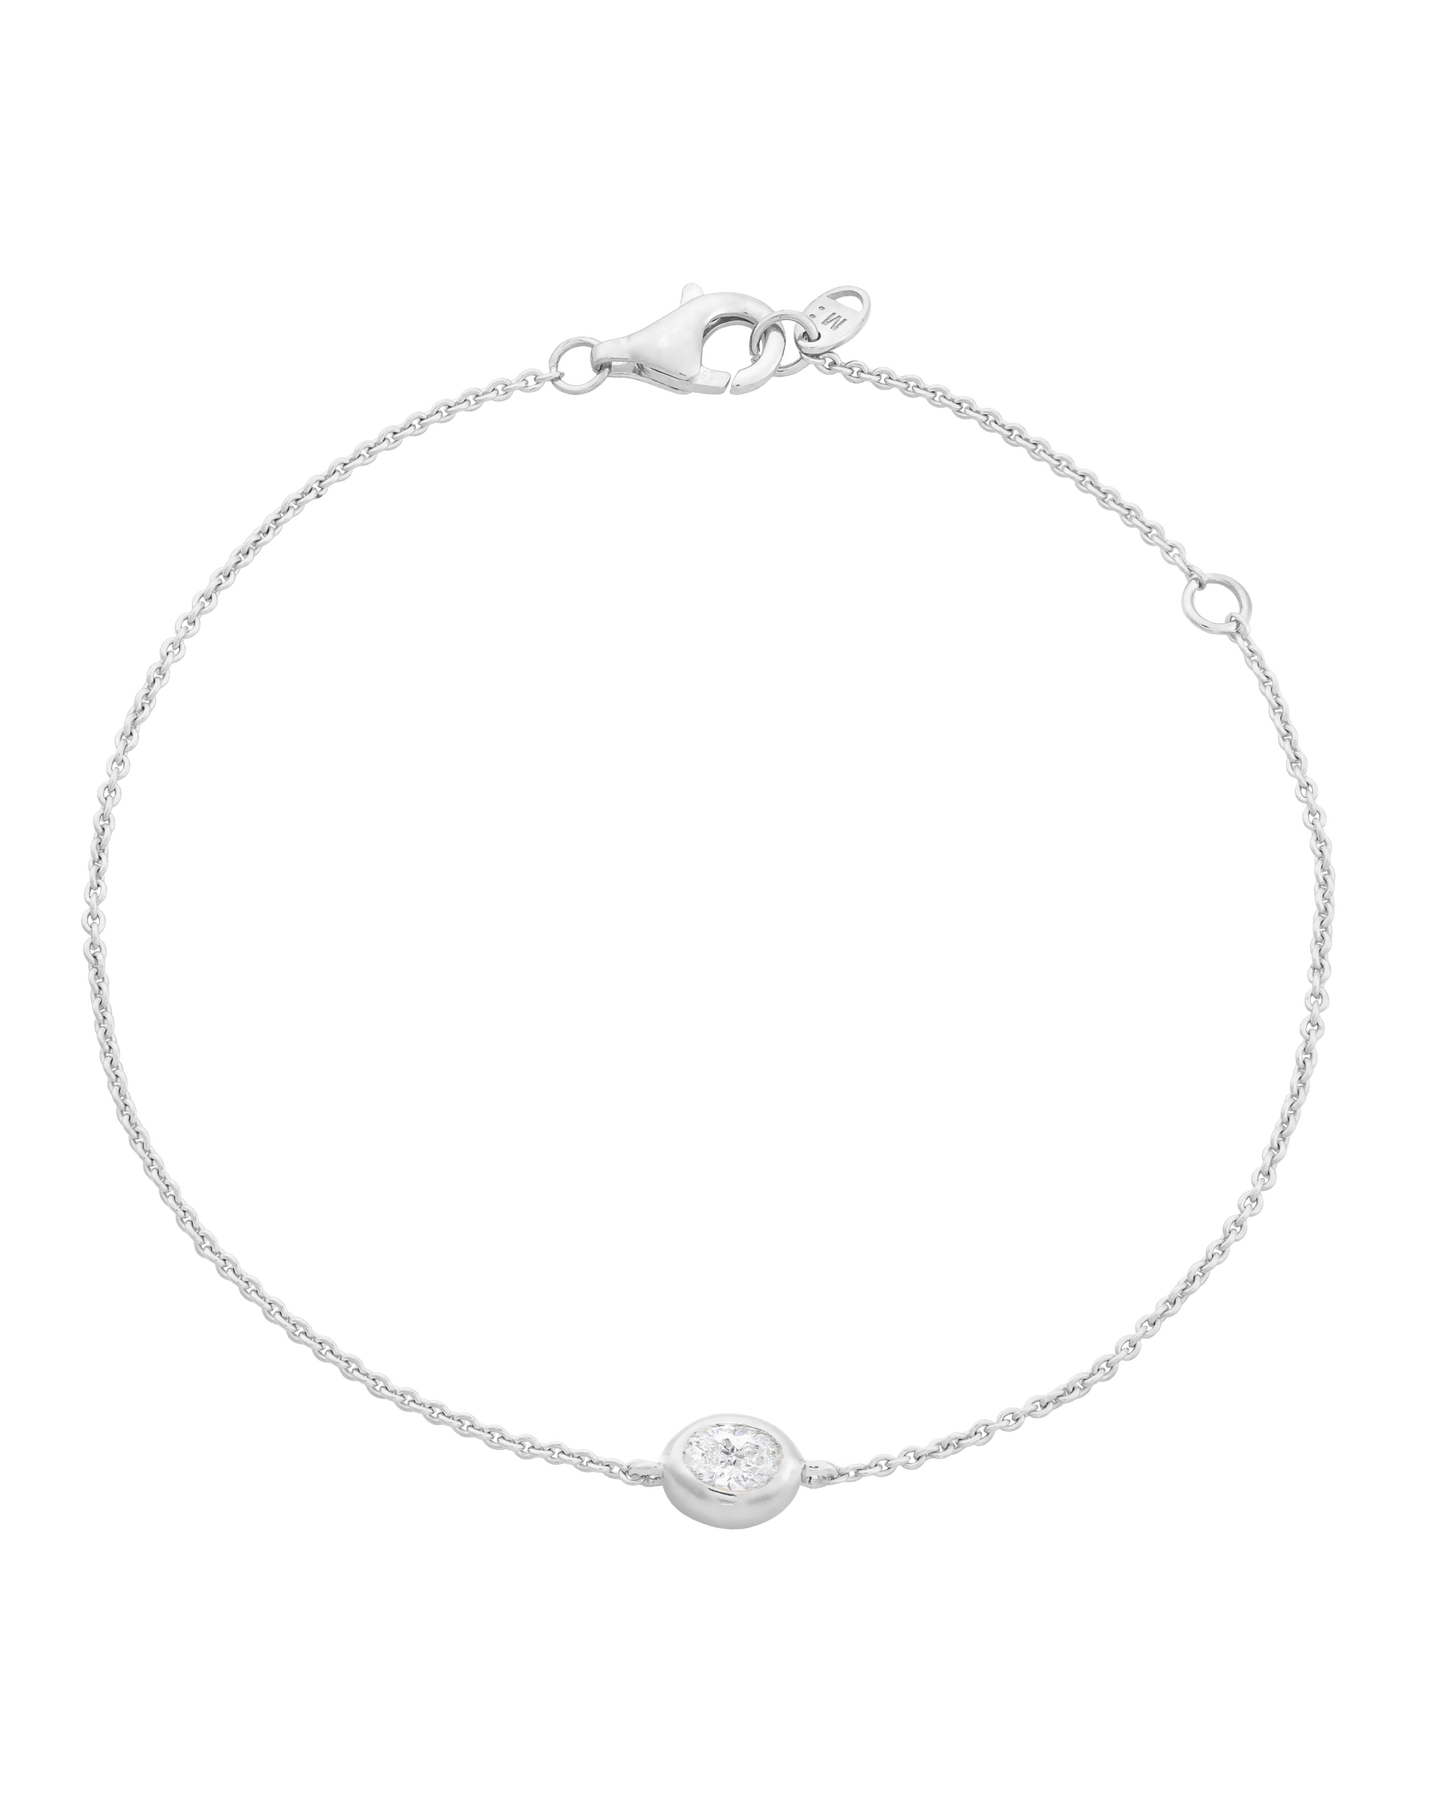 Oval Solitaire Diamond Bracelet - 925 Sterling Silver Bracelets magal-dev 0.10 CT 6"+1“ extender 